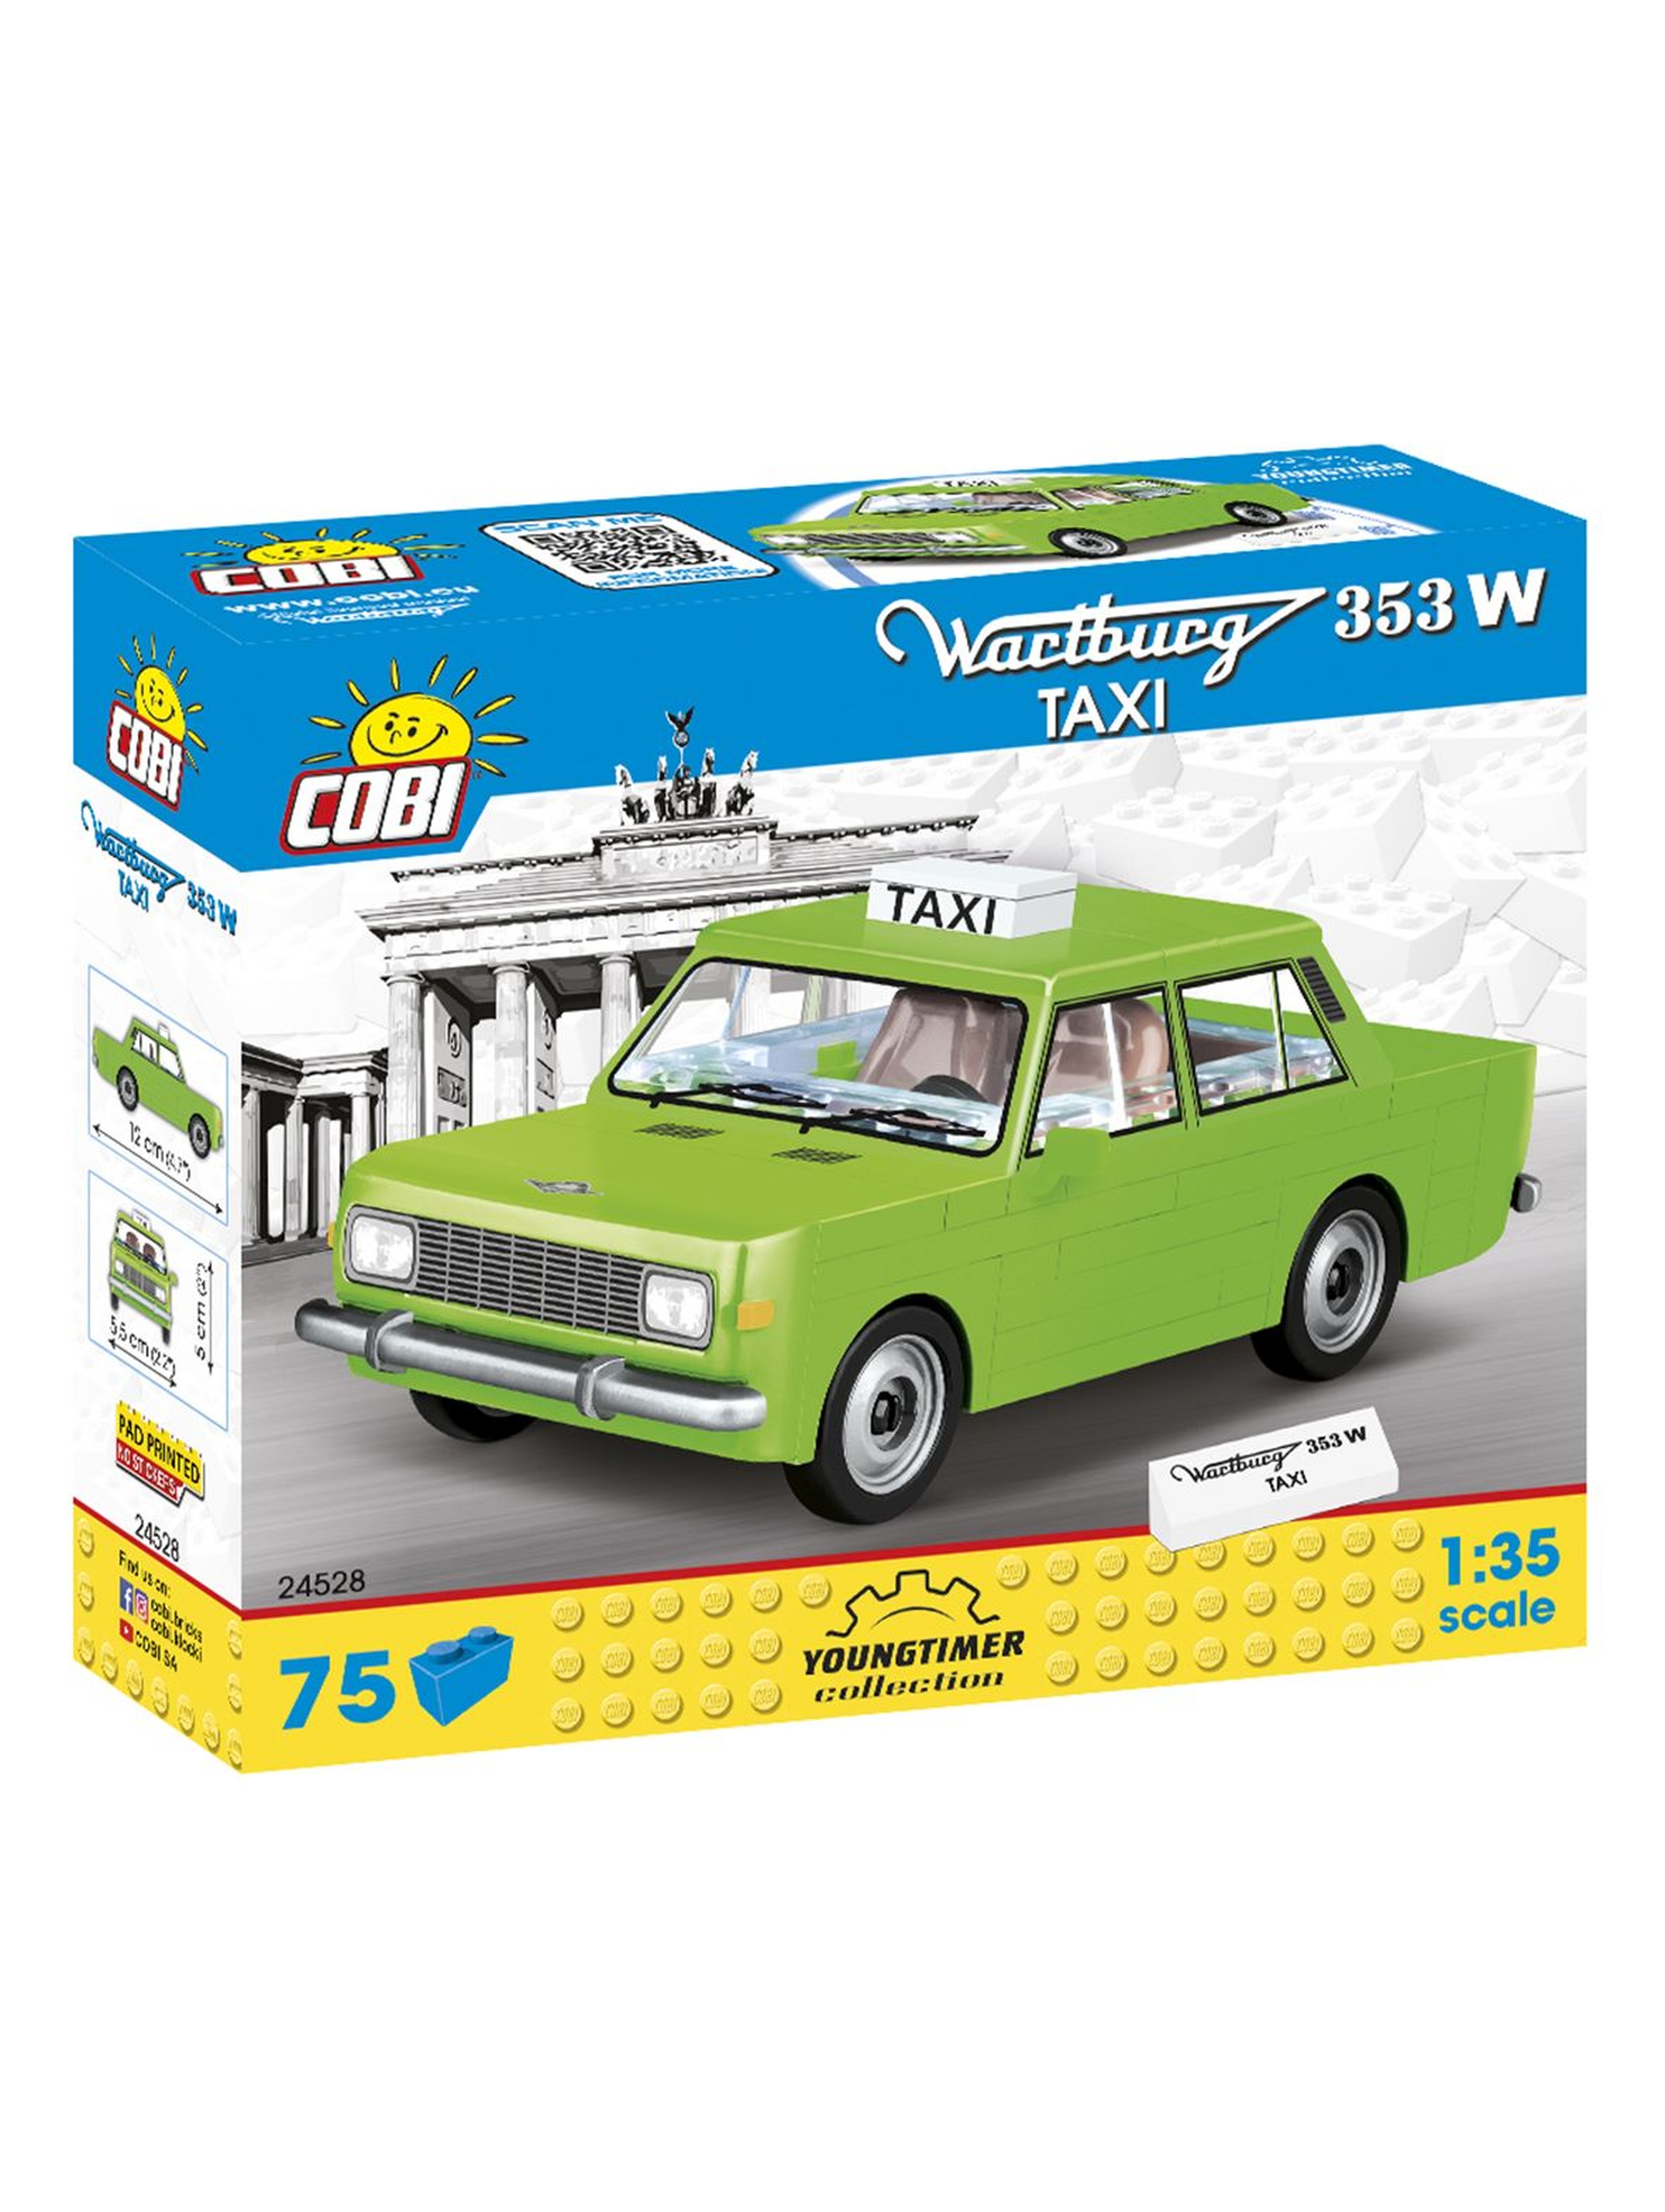 Klocki COBI 24528 Wartburg 353W Taxi Youngtimer Collection - 75 elementów